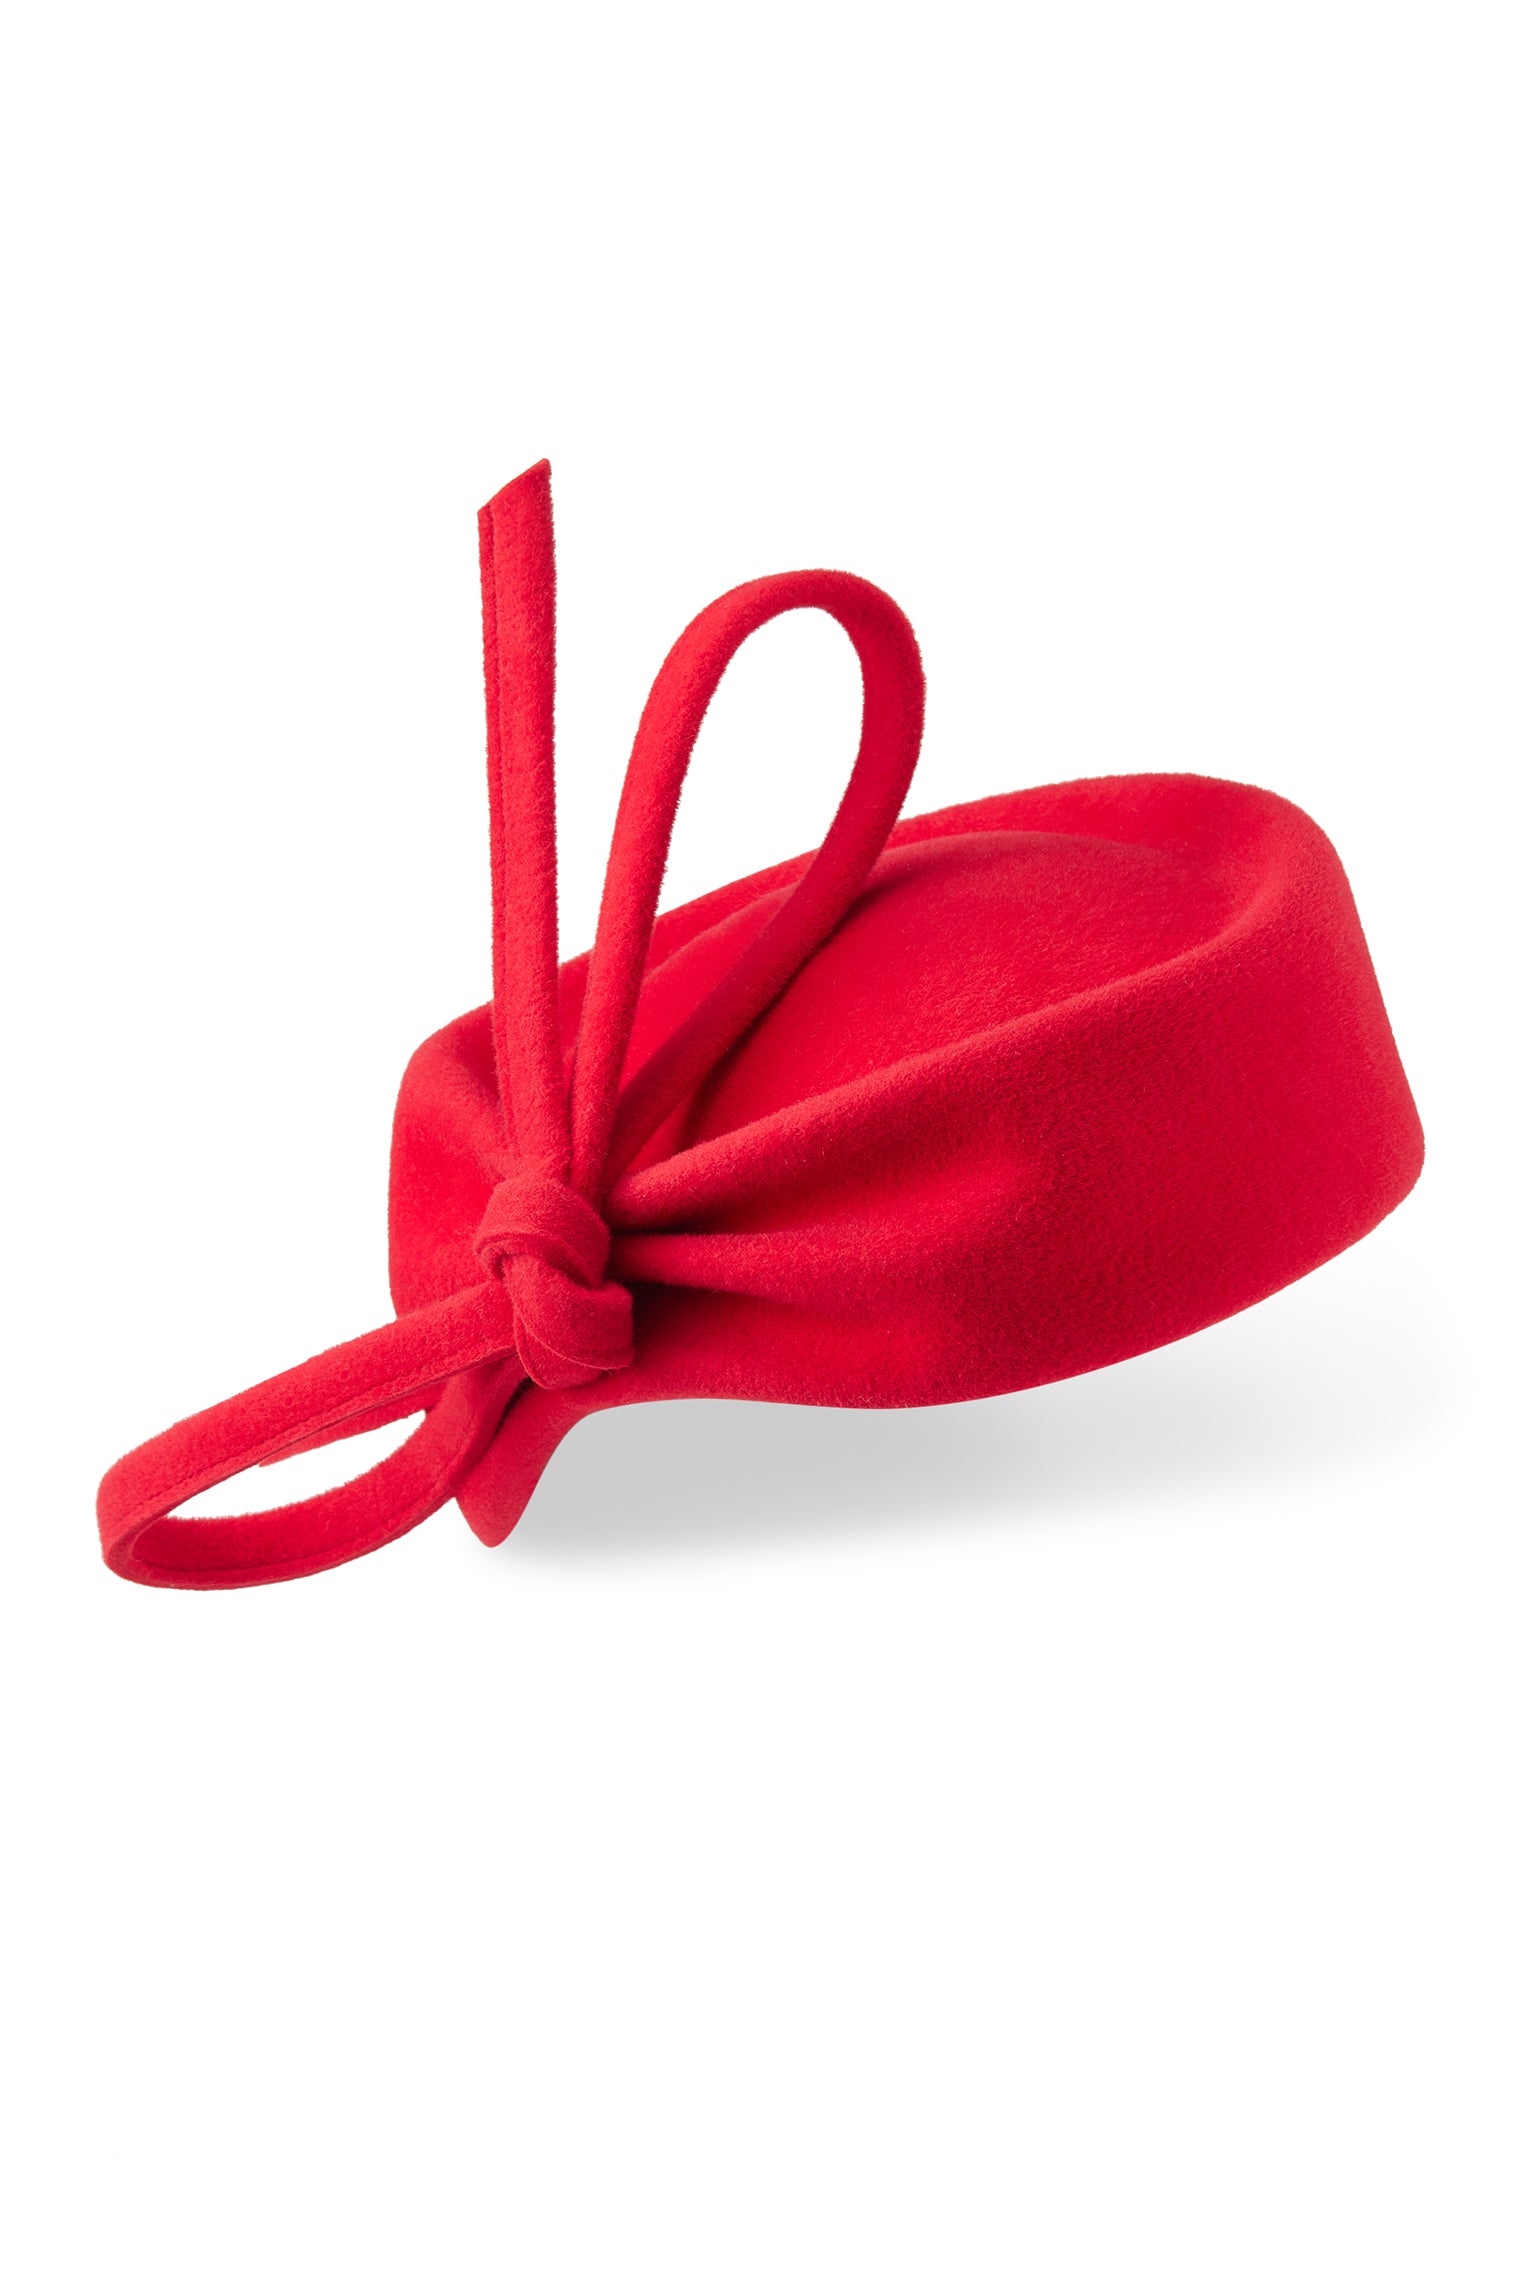 Mayfair Red Pillbox Hat - Hats for Cheltenham Races - Lock & Co. Hatters London UK